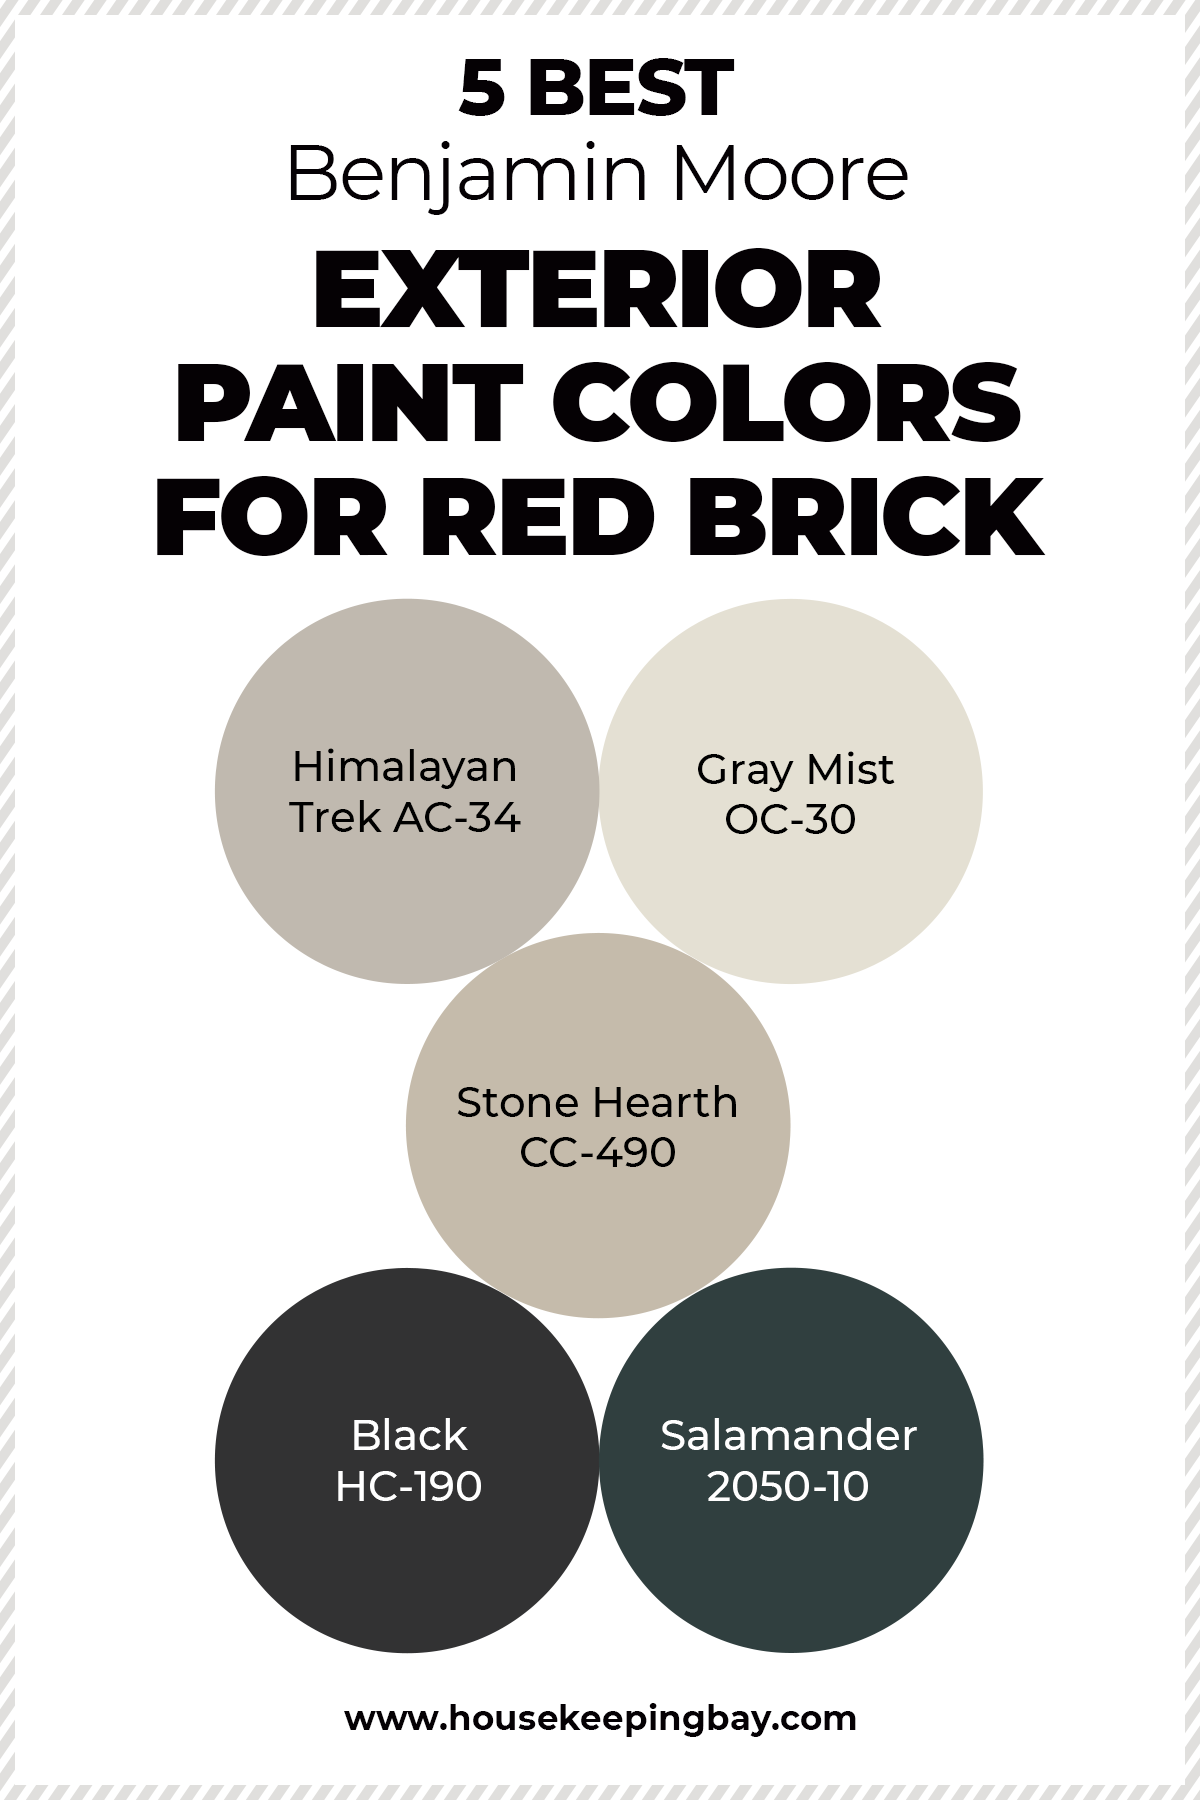 5 BEST Benjamin Moore Exterior Paint Colors For Red Brick